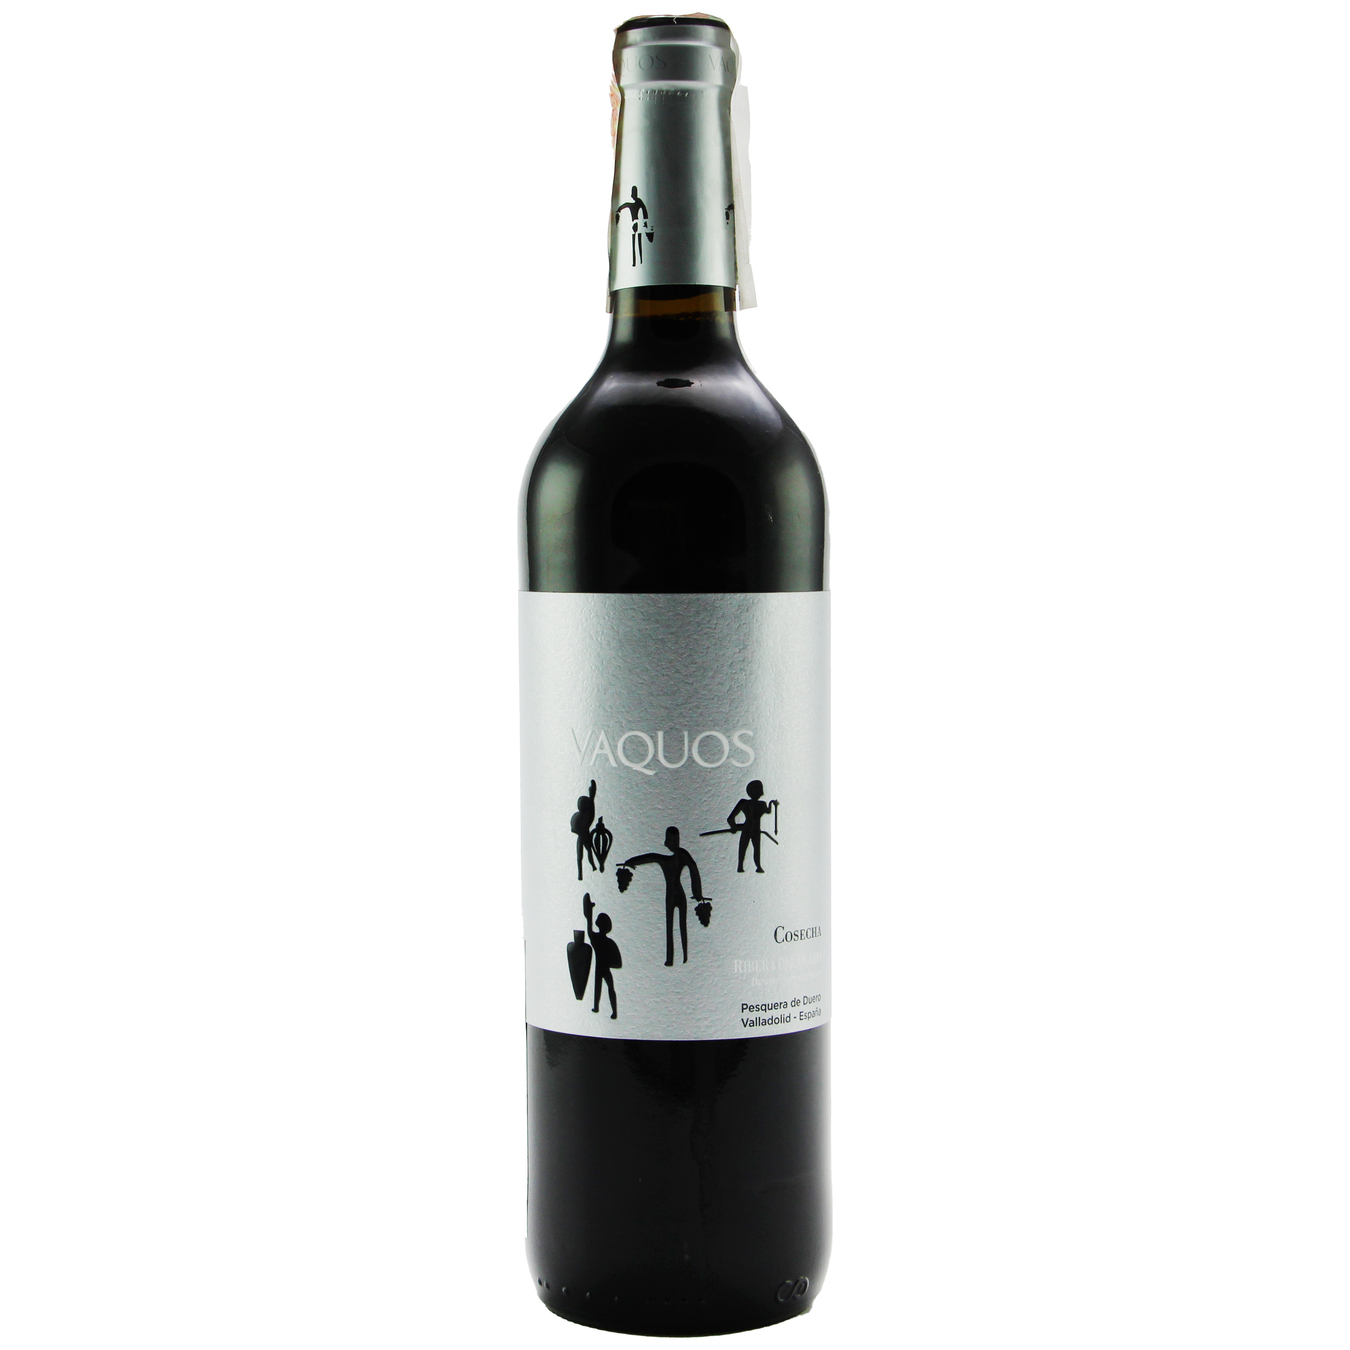 Vaquos Cosecha dry red wine 13% 0,75l